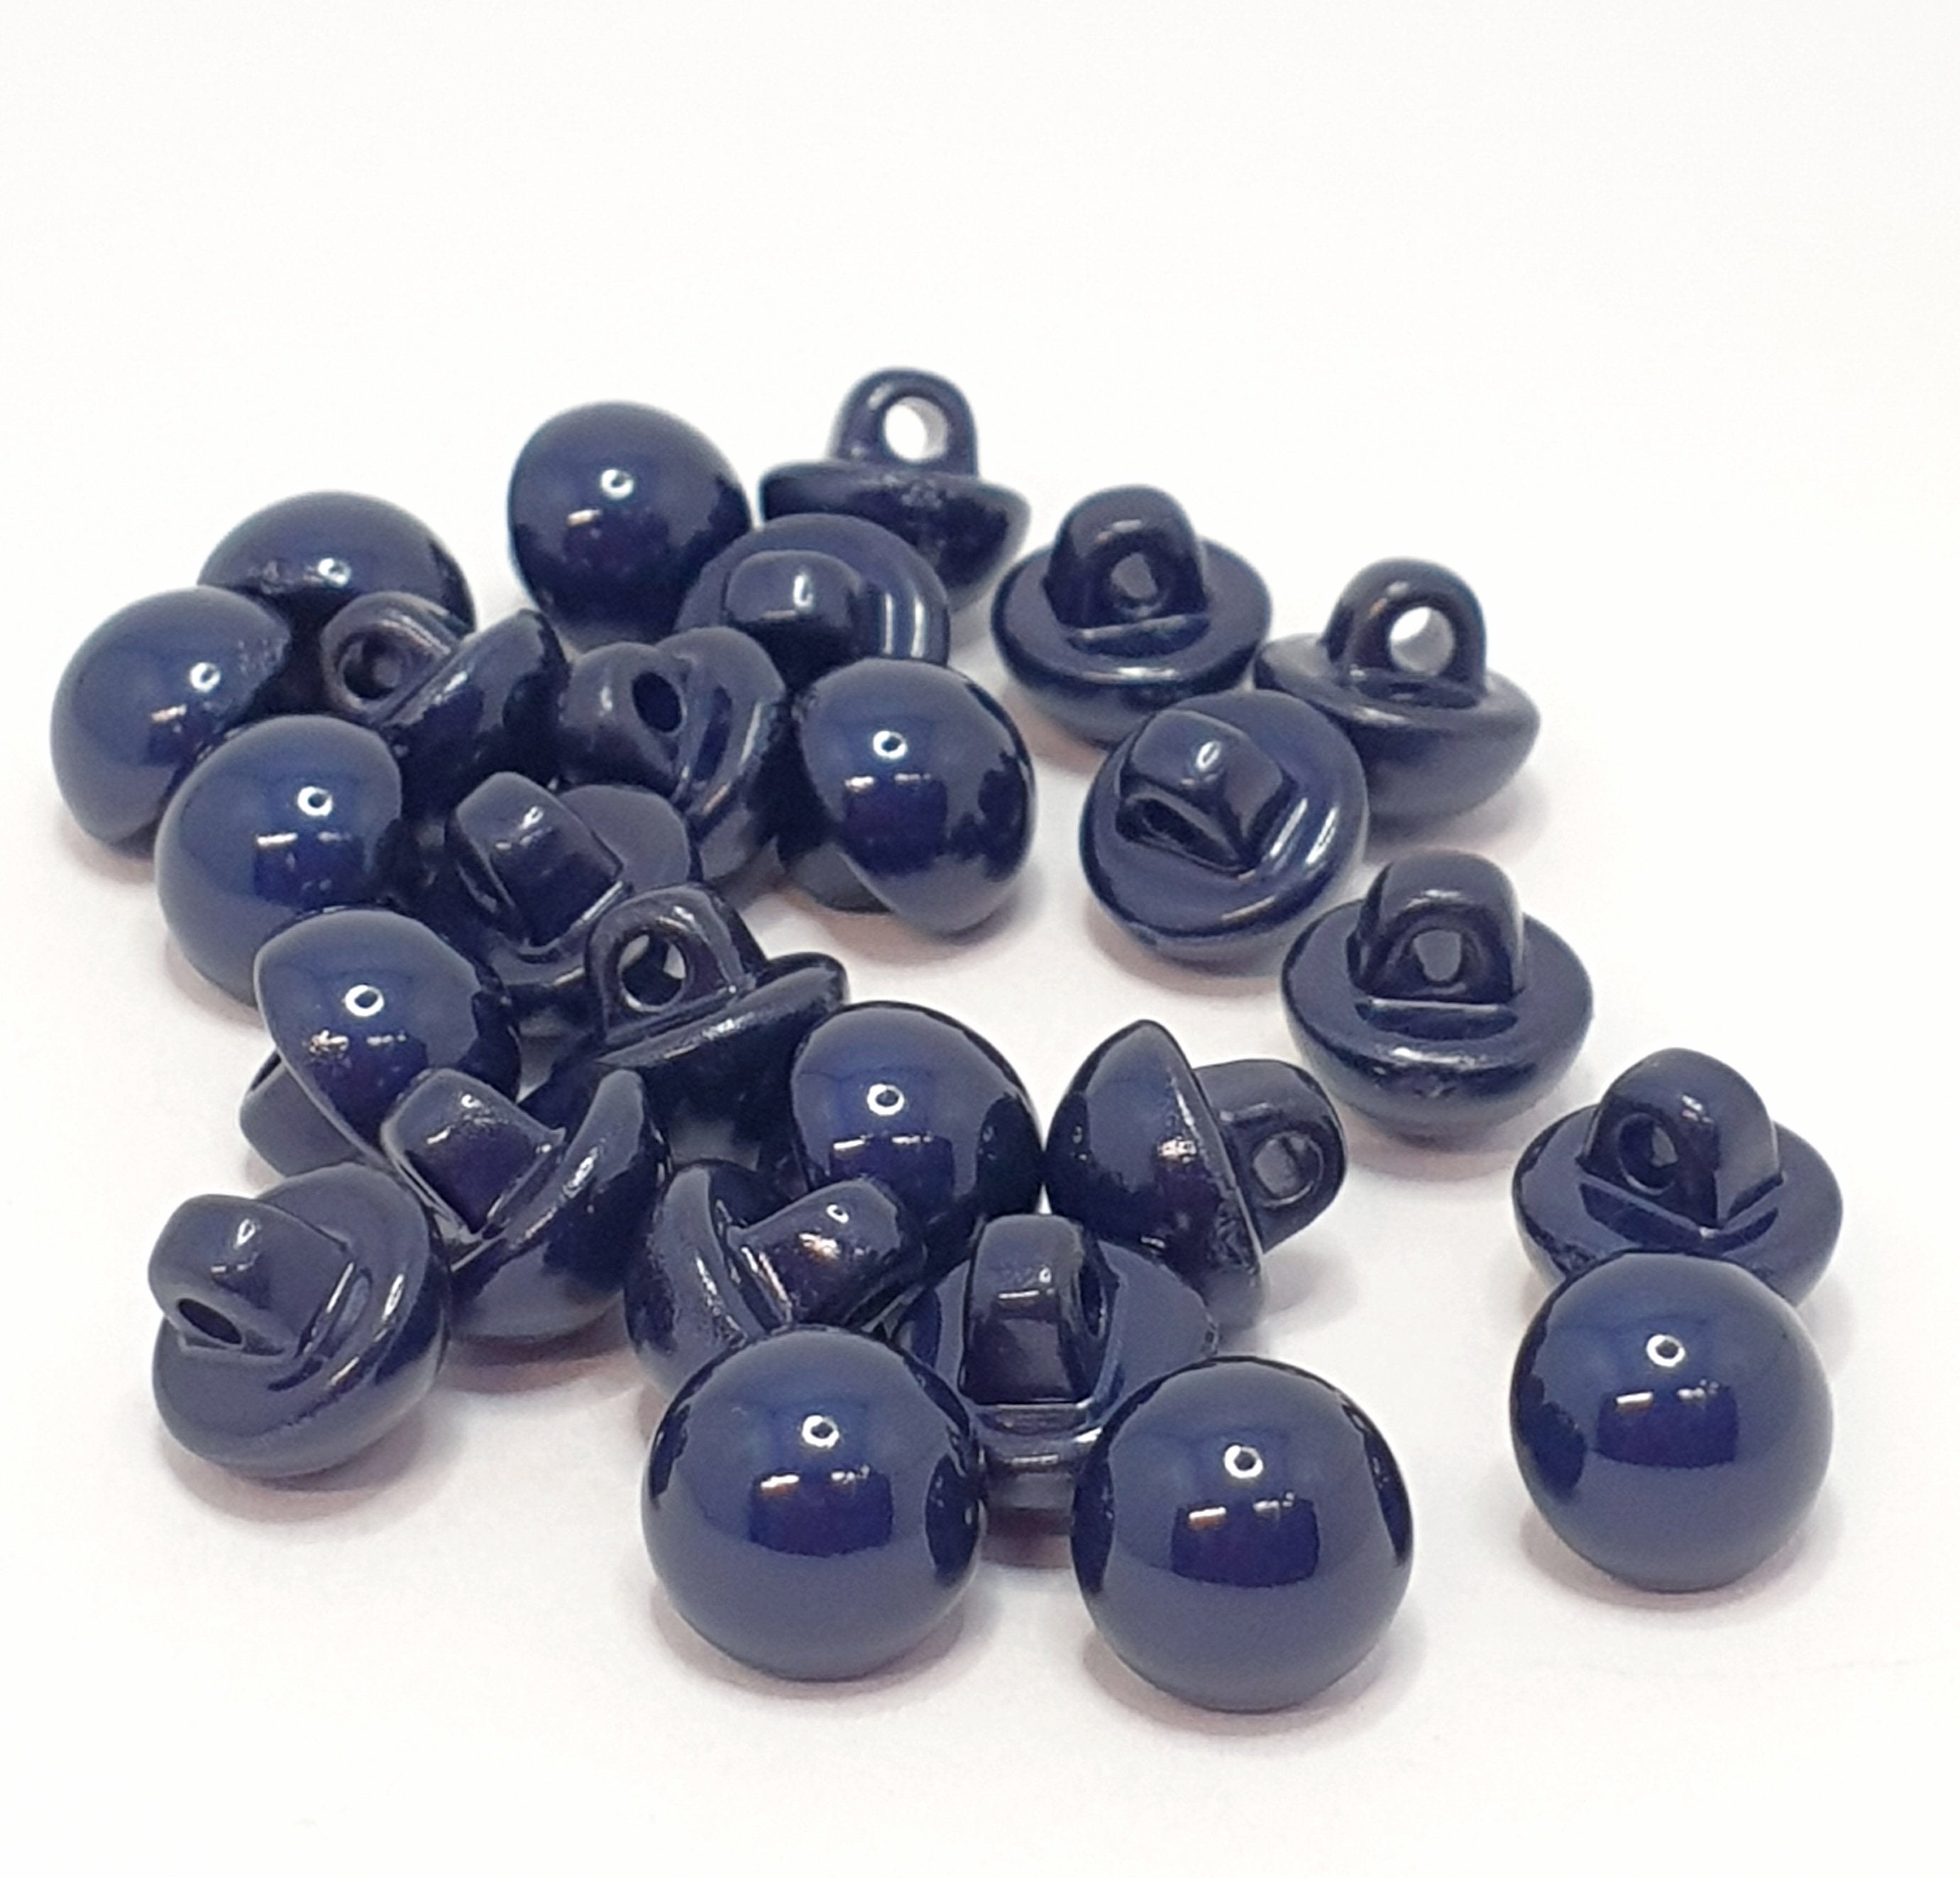 MajorCrafts 30pcs 10mm Navy Blue High-Grade Acrylic Small Round Sewing Mushroom Shank Buttons